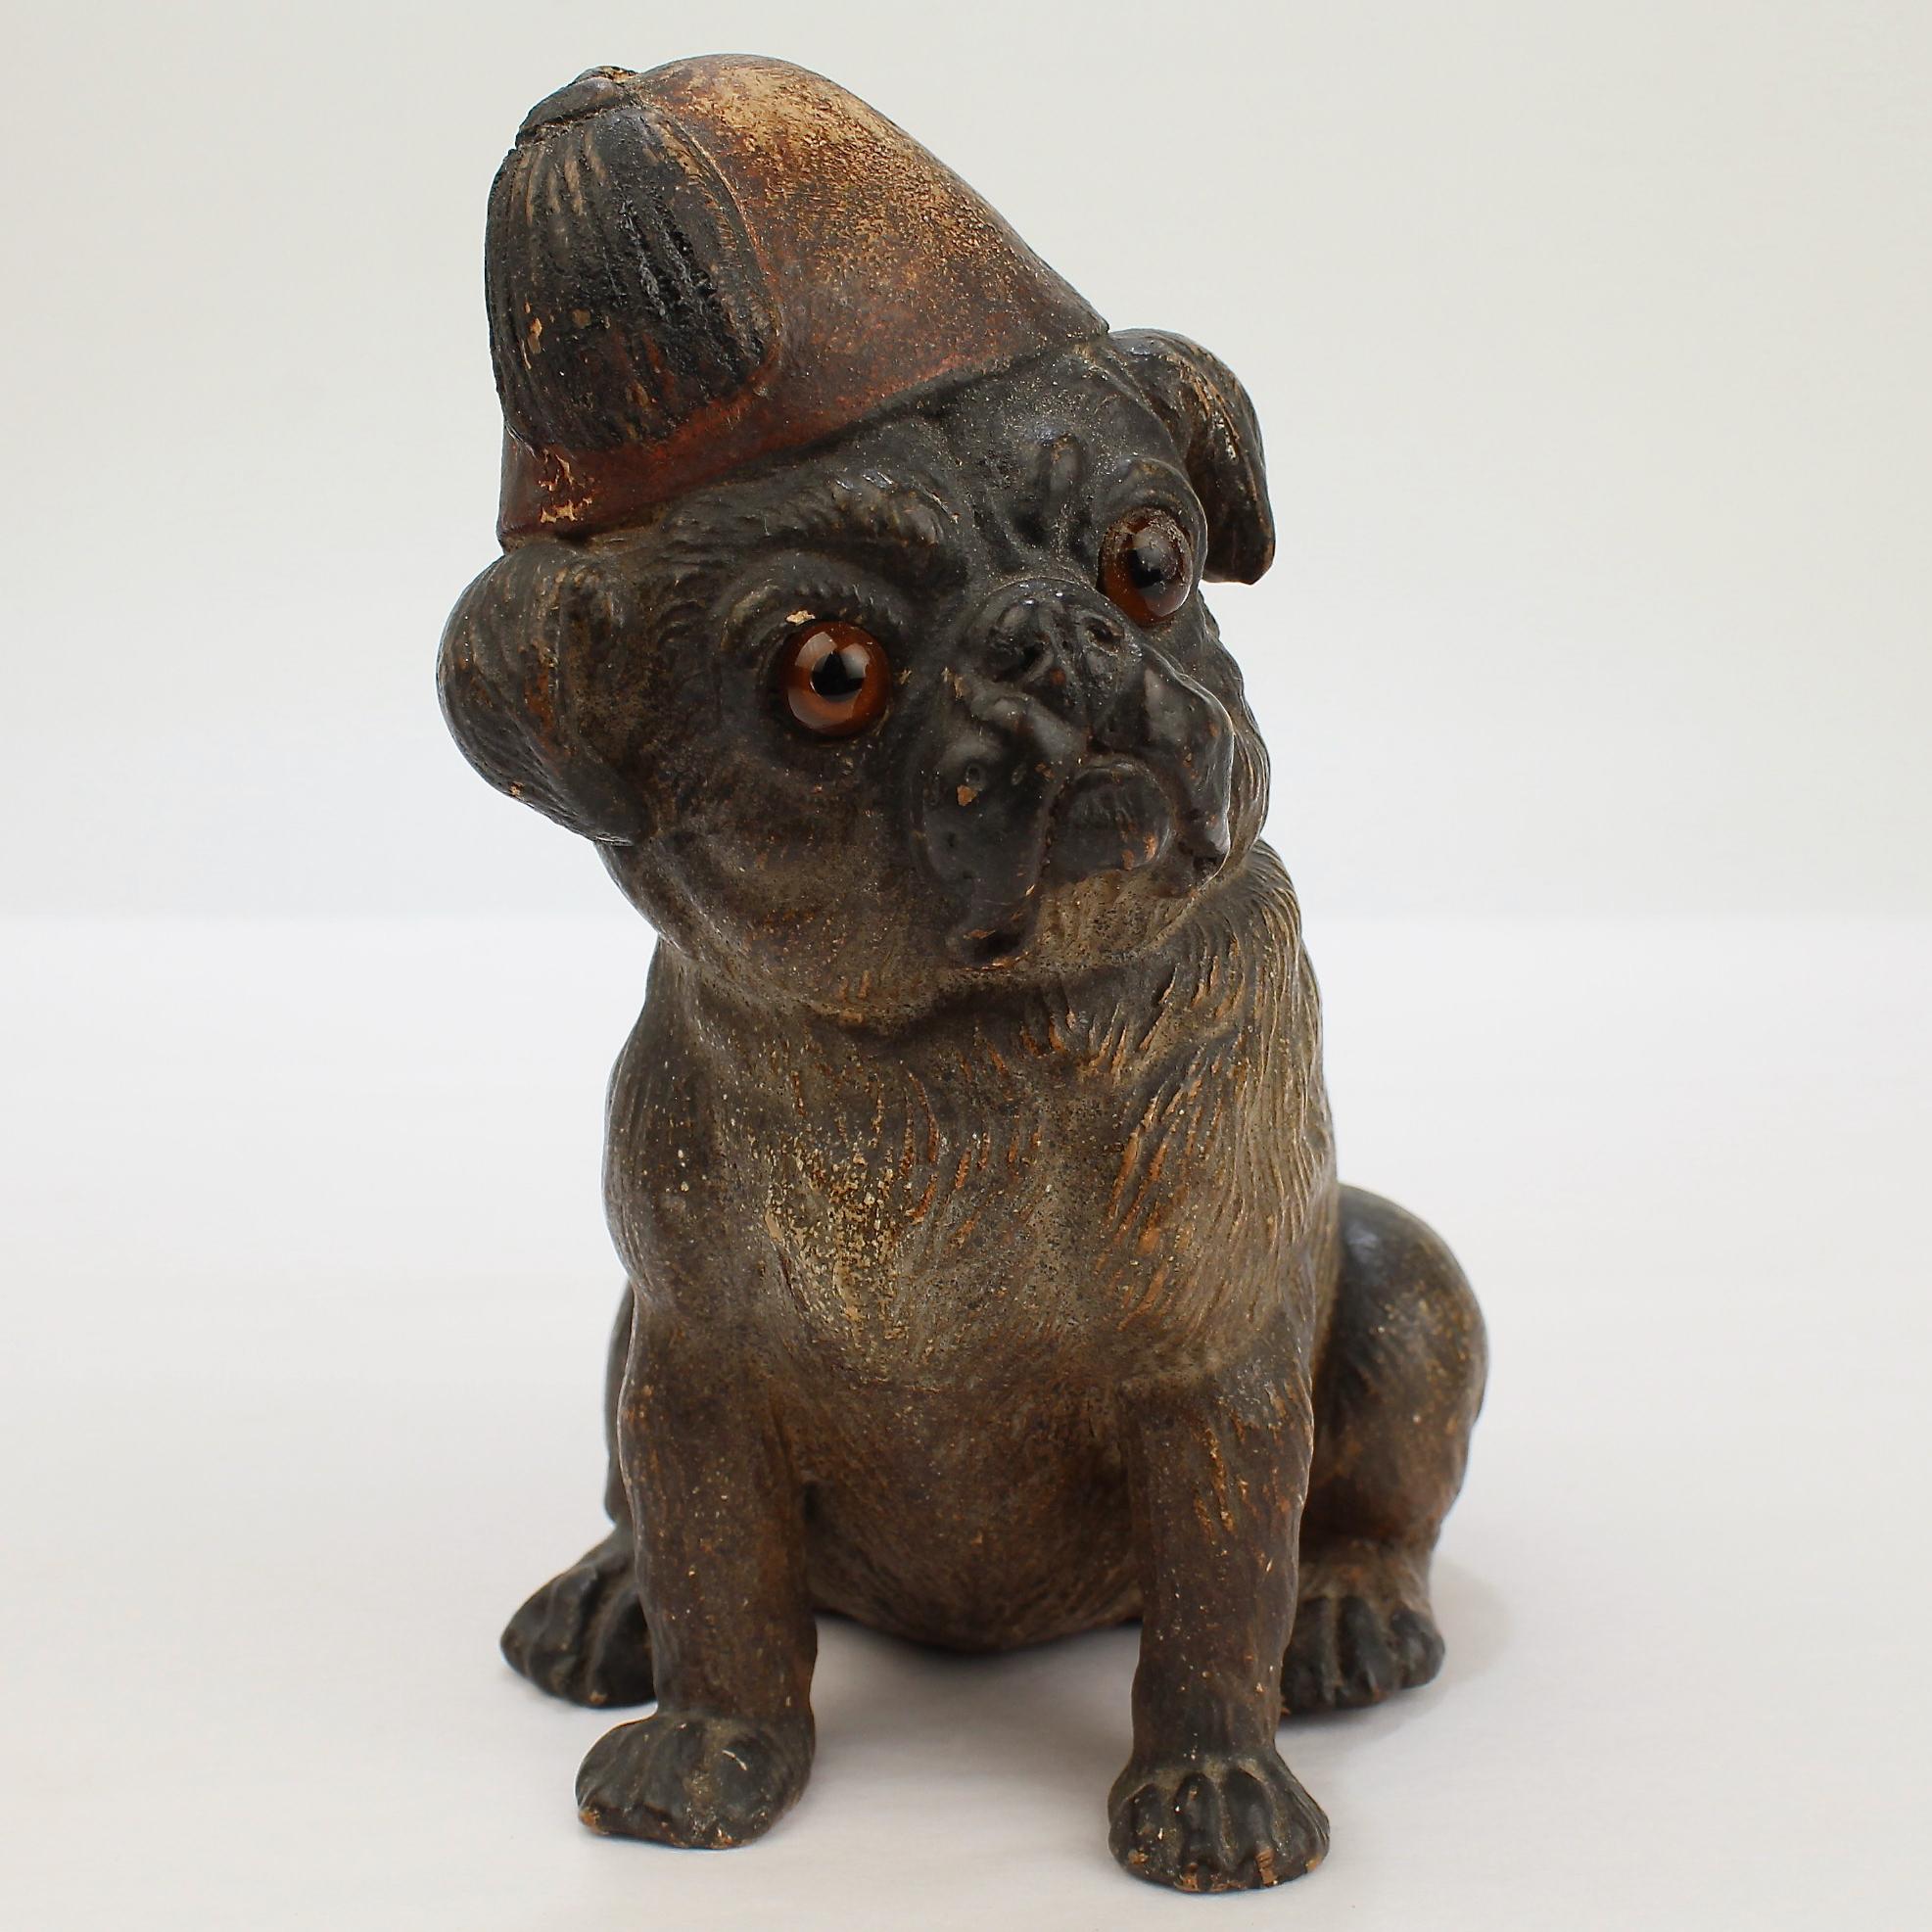 Austrian Antique Terra Cotta Pottery Pug Dog Figure from the Mario Buatta Collection